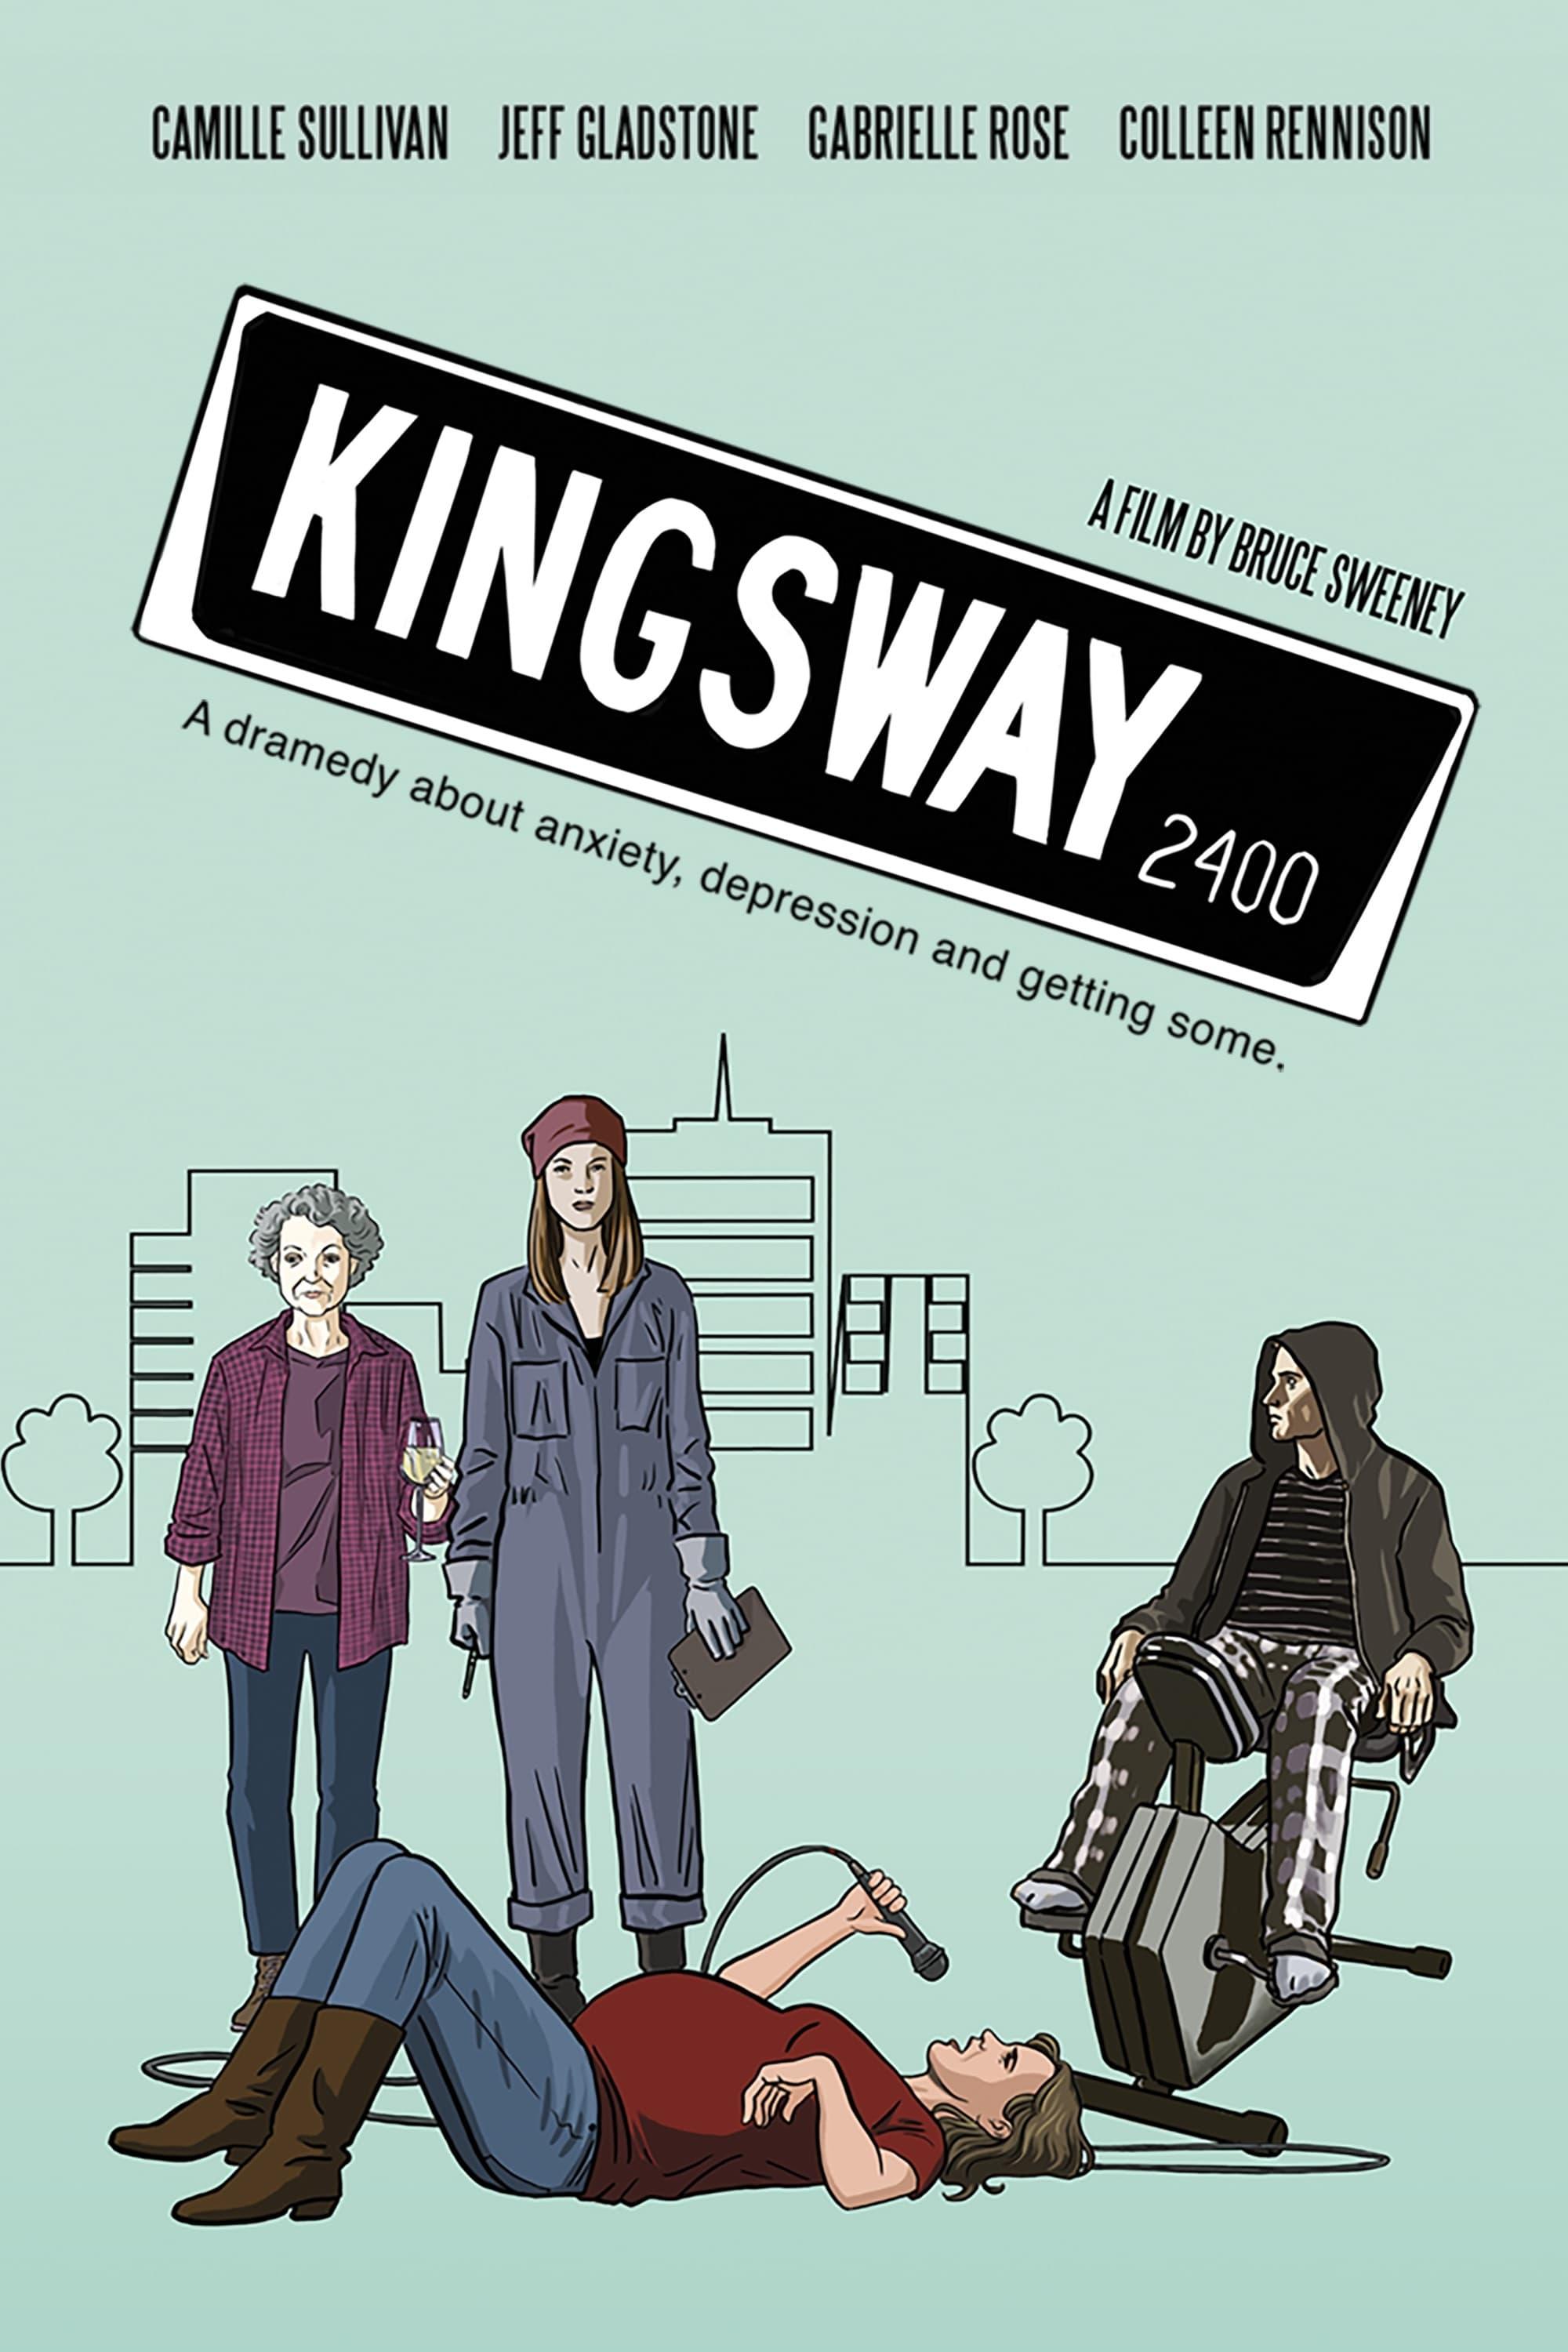 Kingsway poster